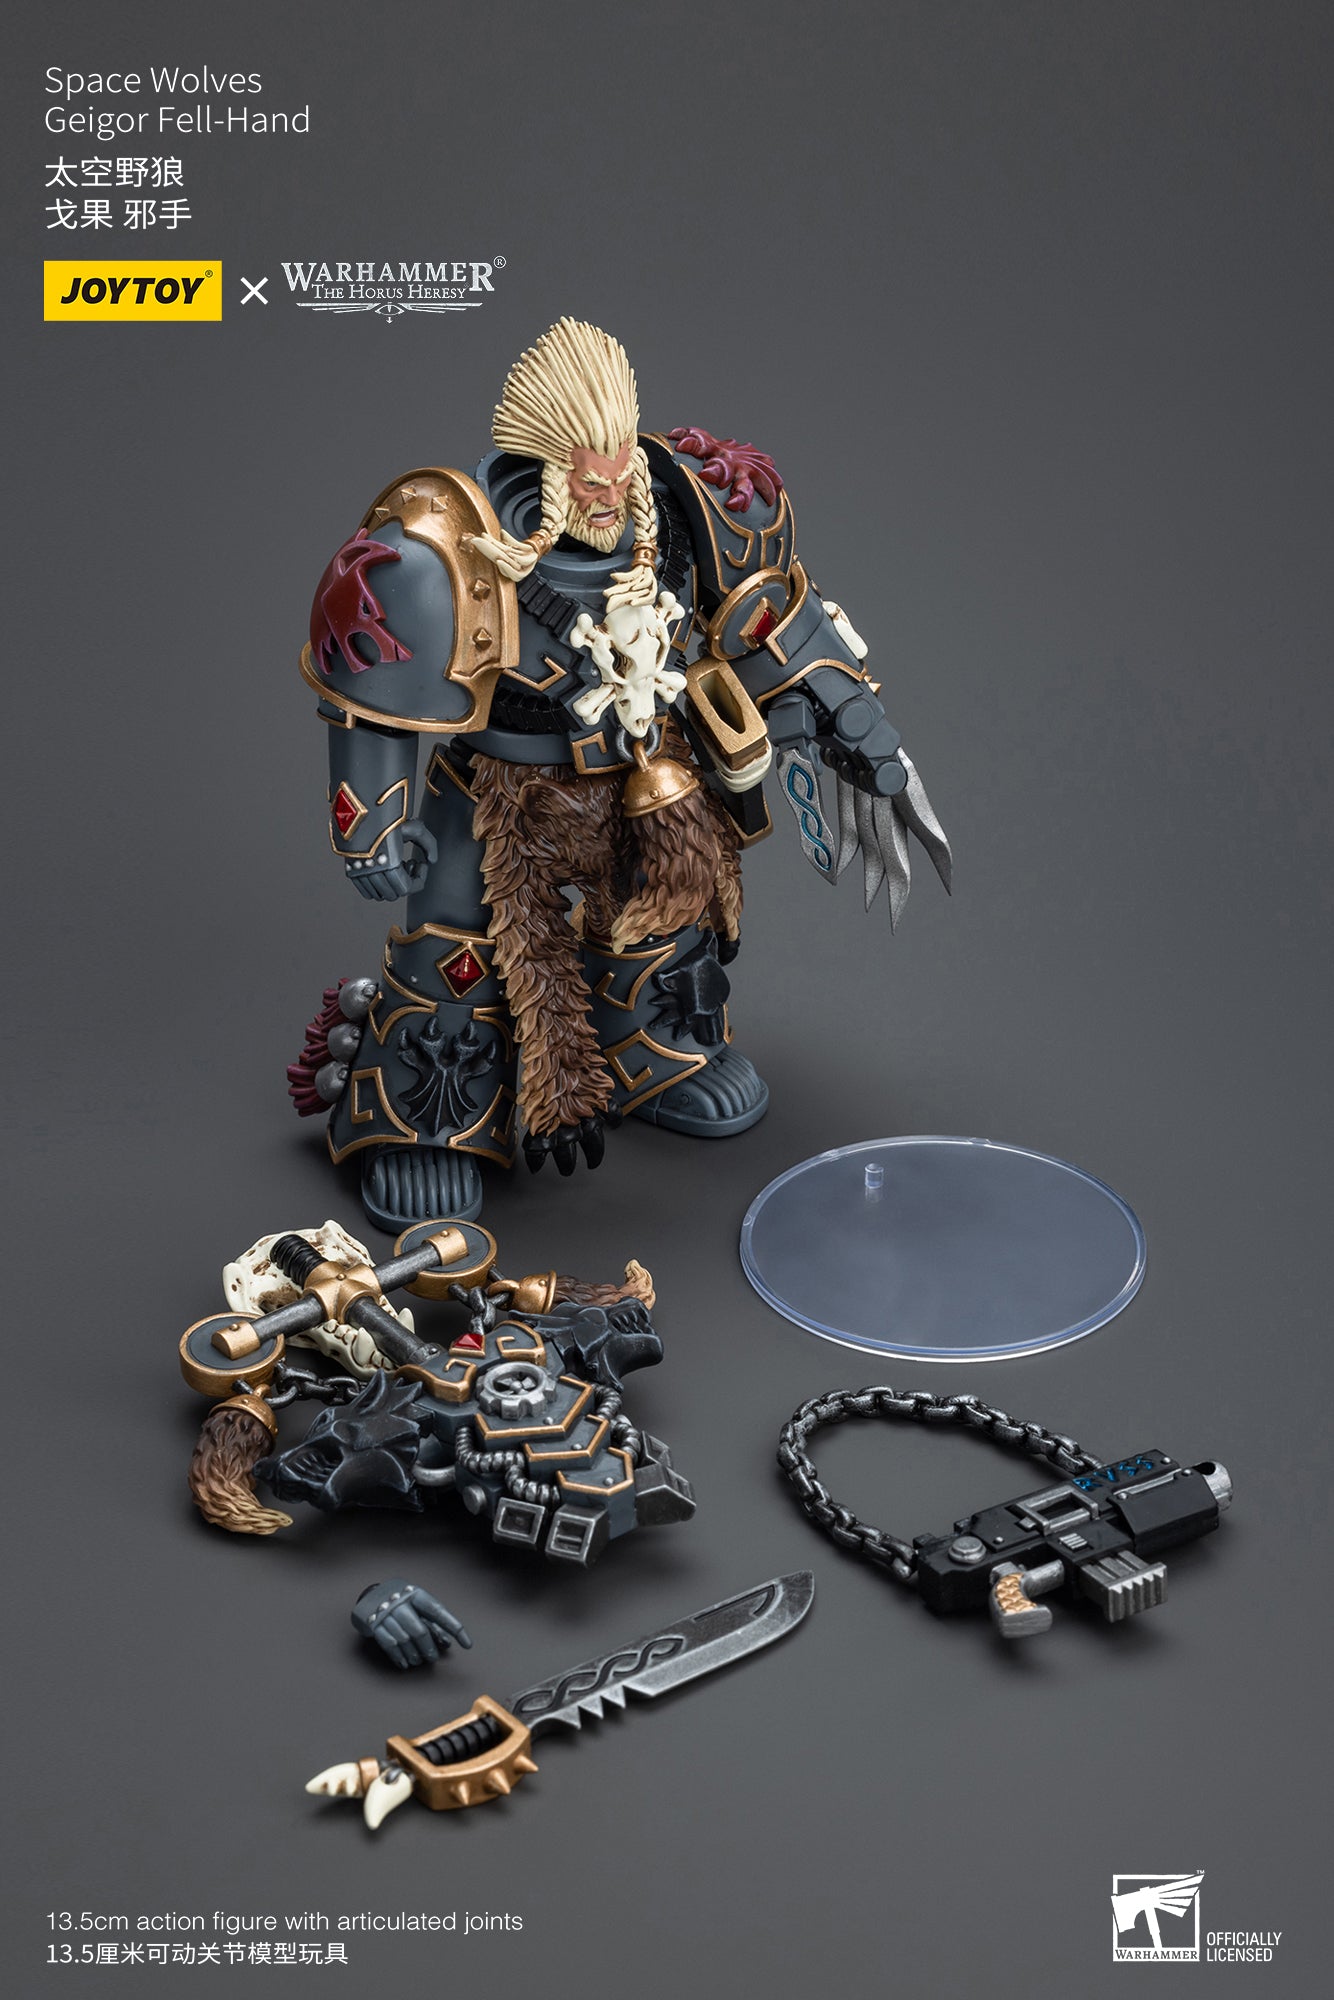 Warhammer: Horus Heresy: Space Wolves: Geigor Fell Hand: Joy Toy